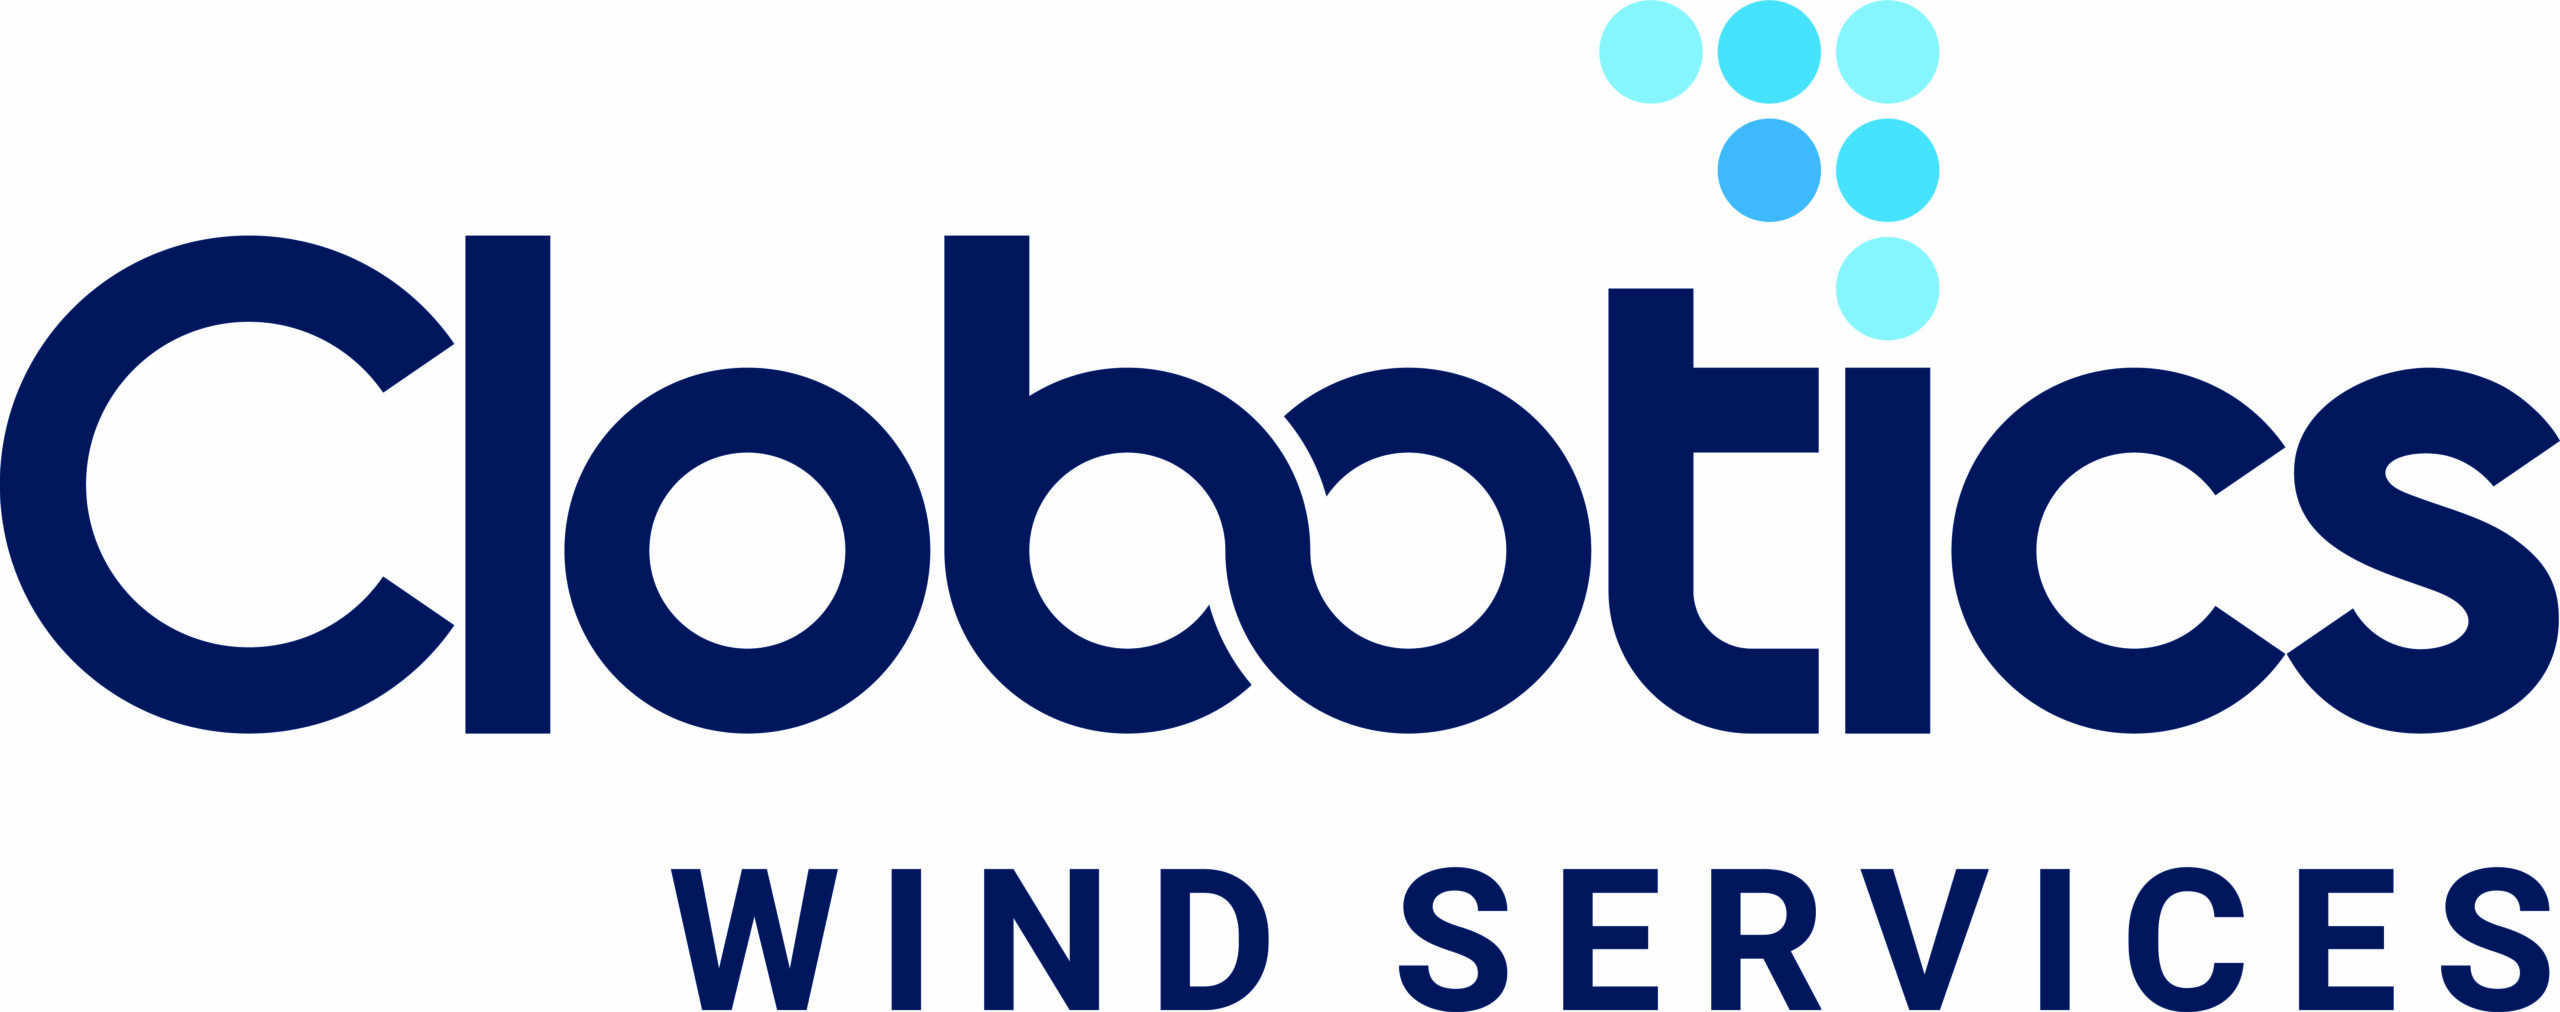 Clobotics Wind Services